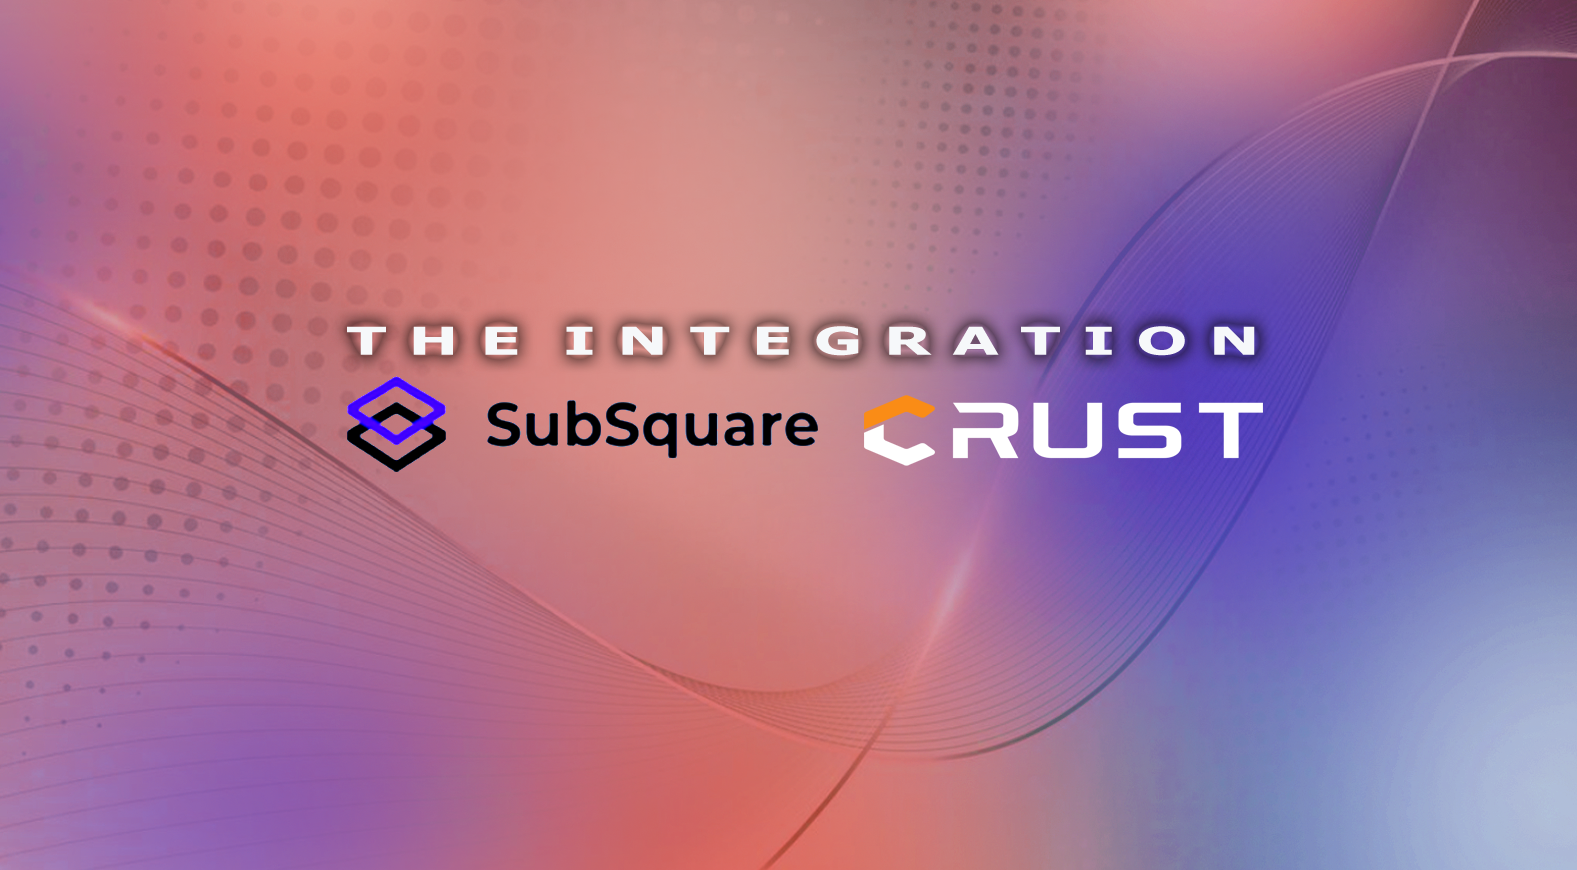 Crust Network